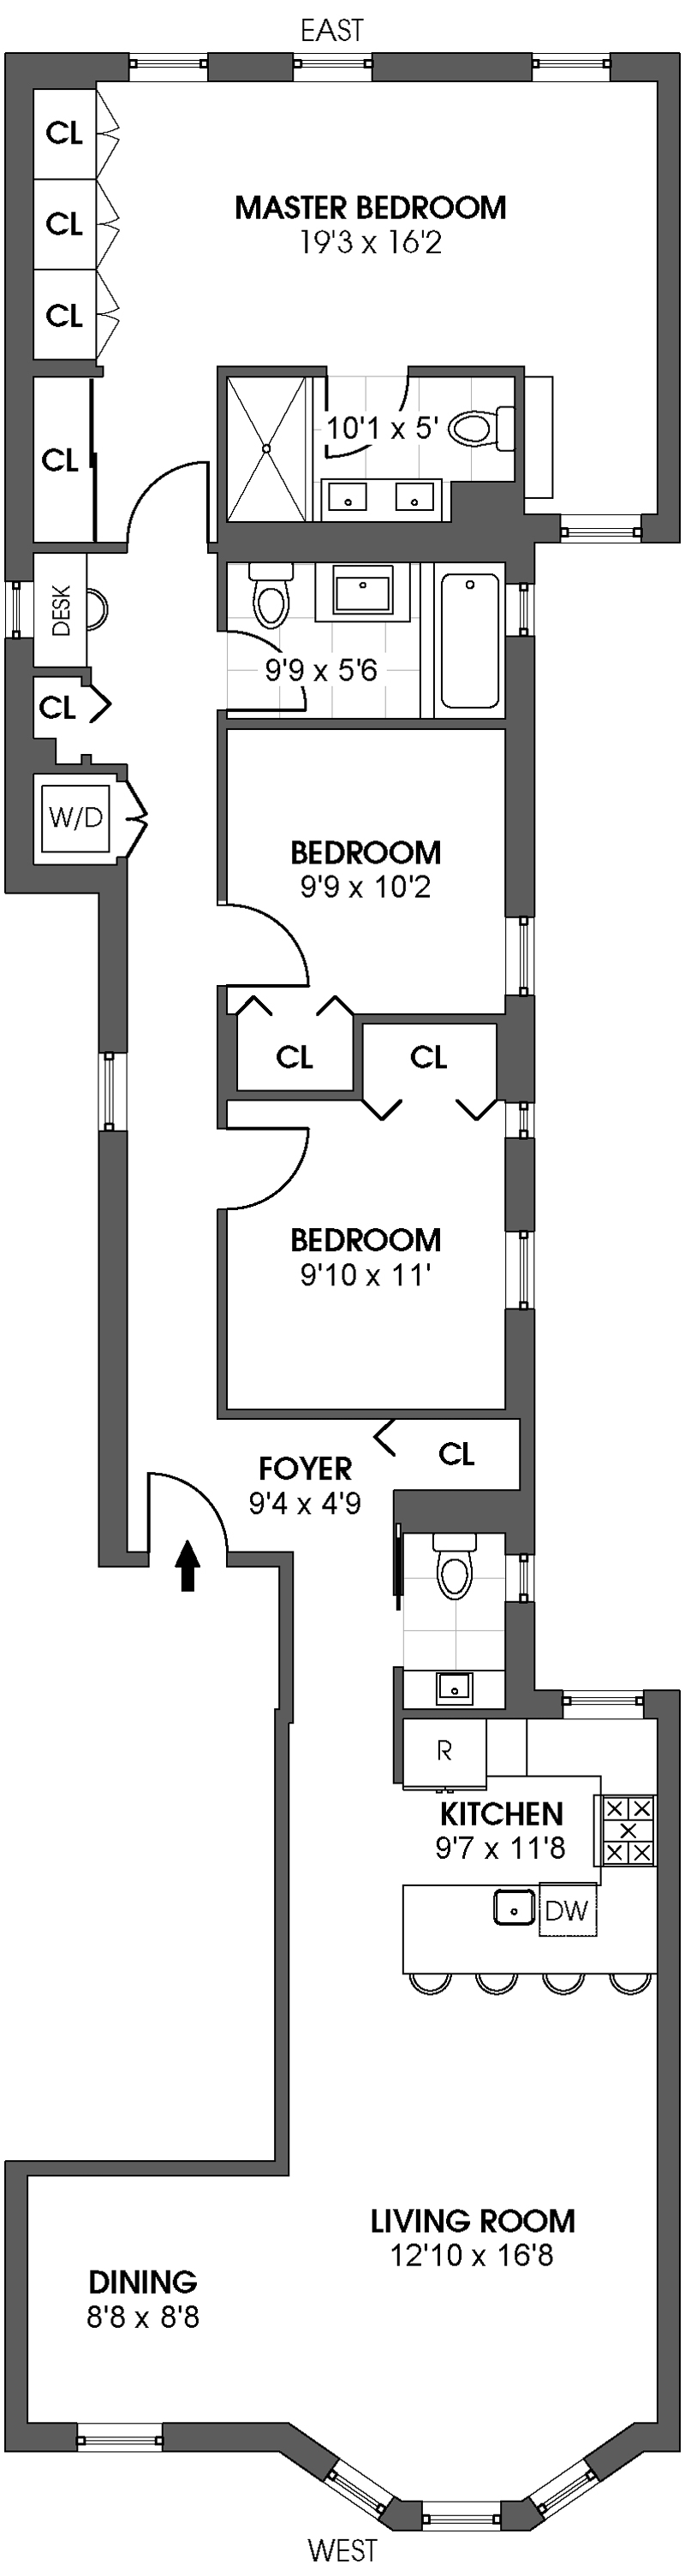 Floorplan for 183 Columbia Heights, 3